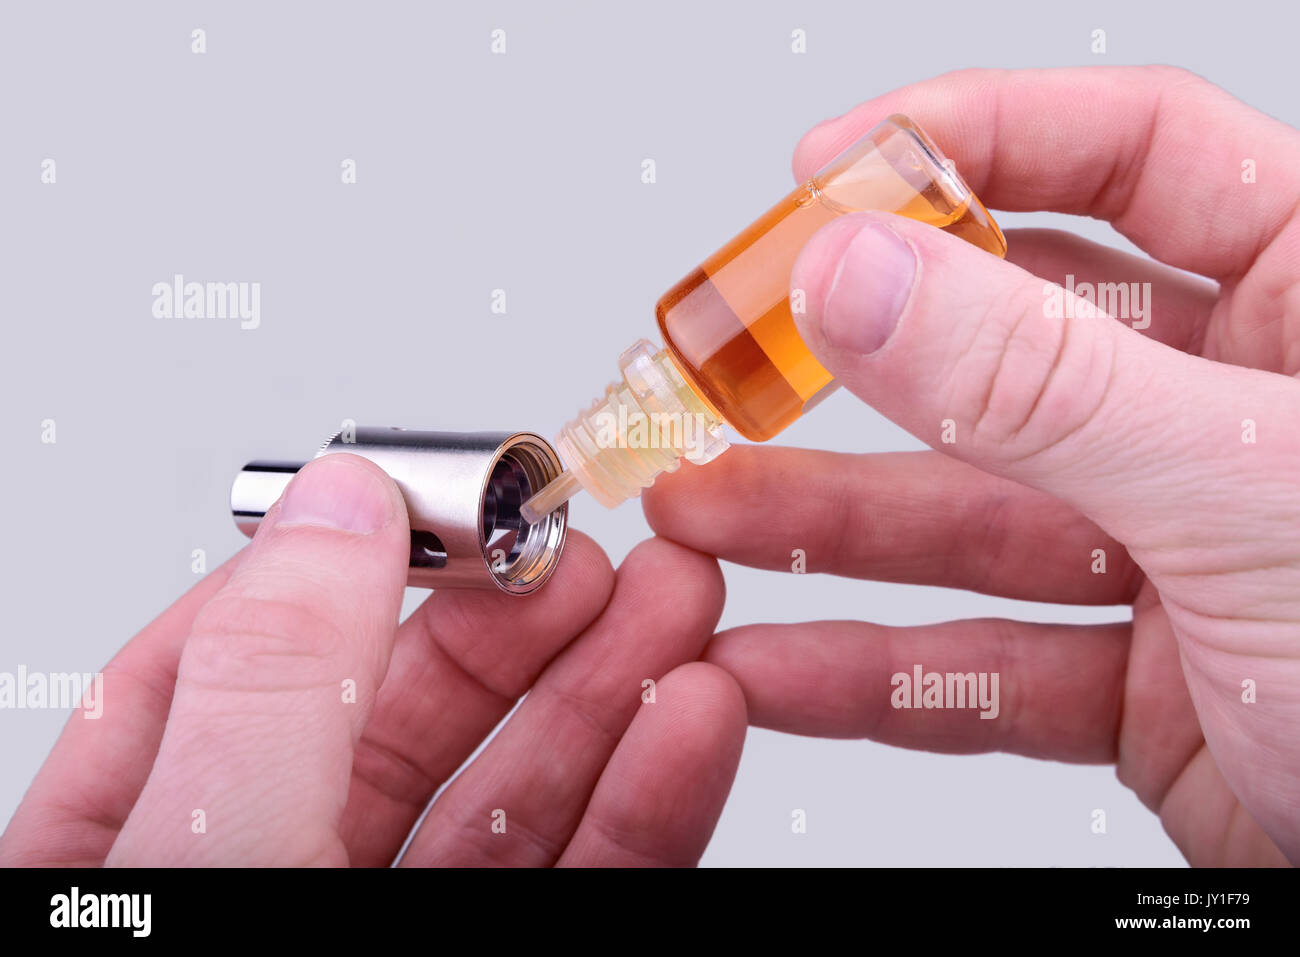 Human hands shows how to fill e-cig atomizer with e-liquid Stock Photo